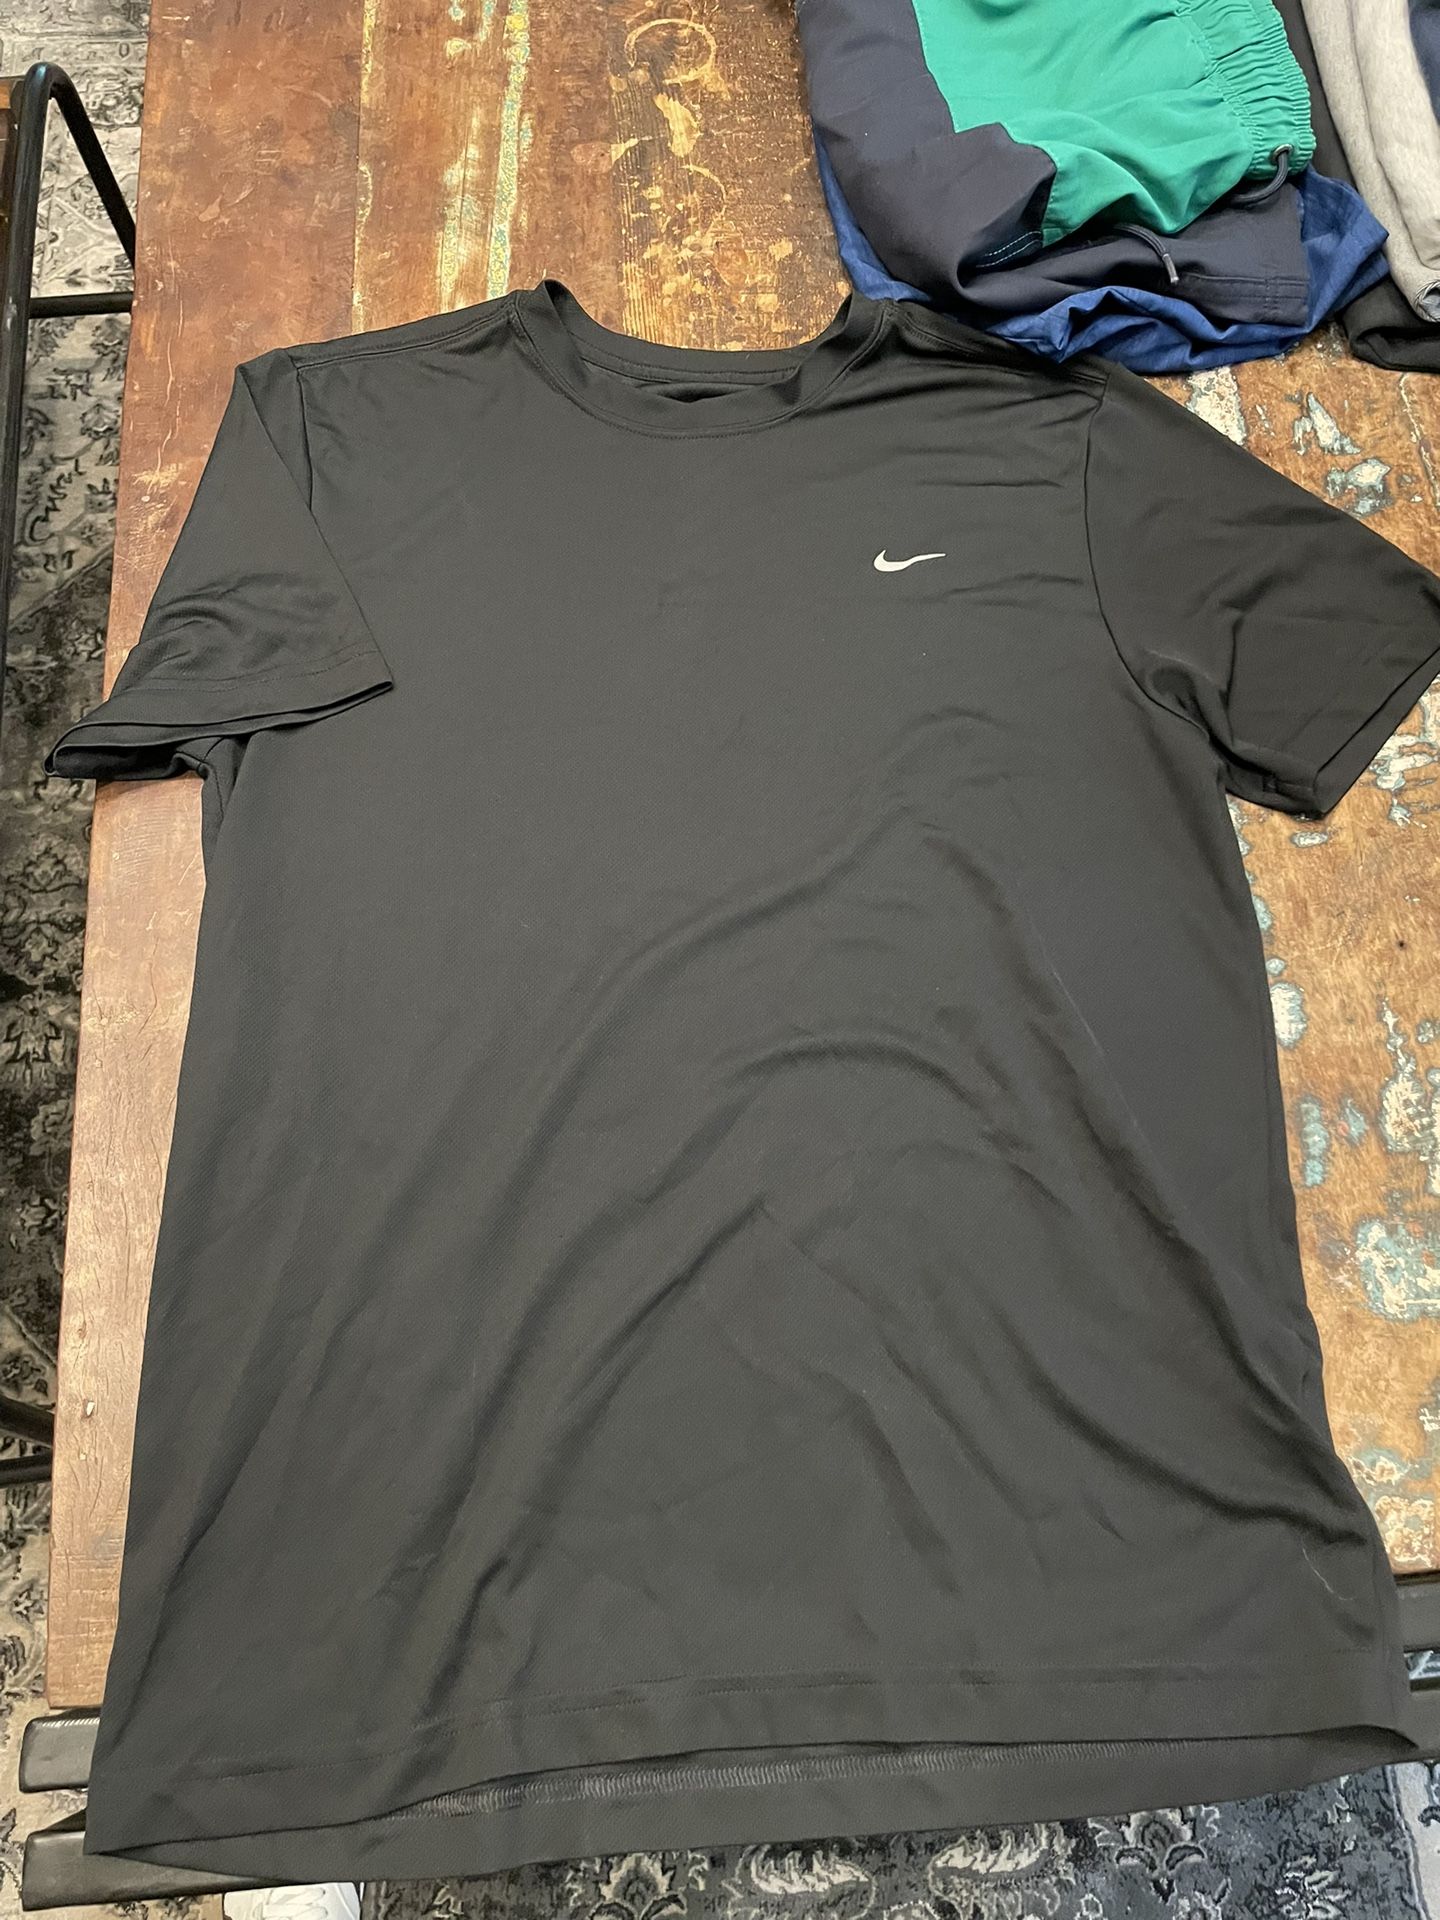 Men’s Medium Nike Athletic Shirt 